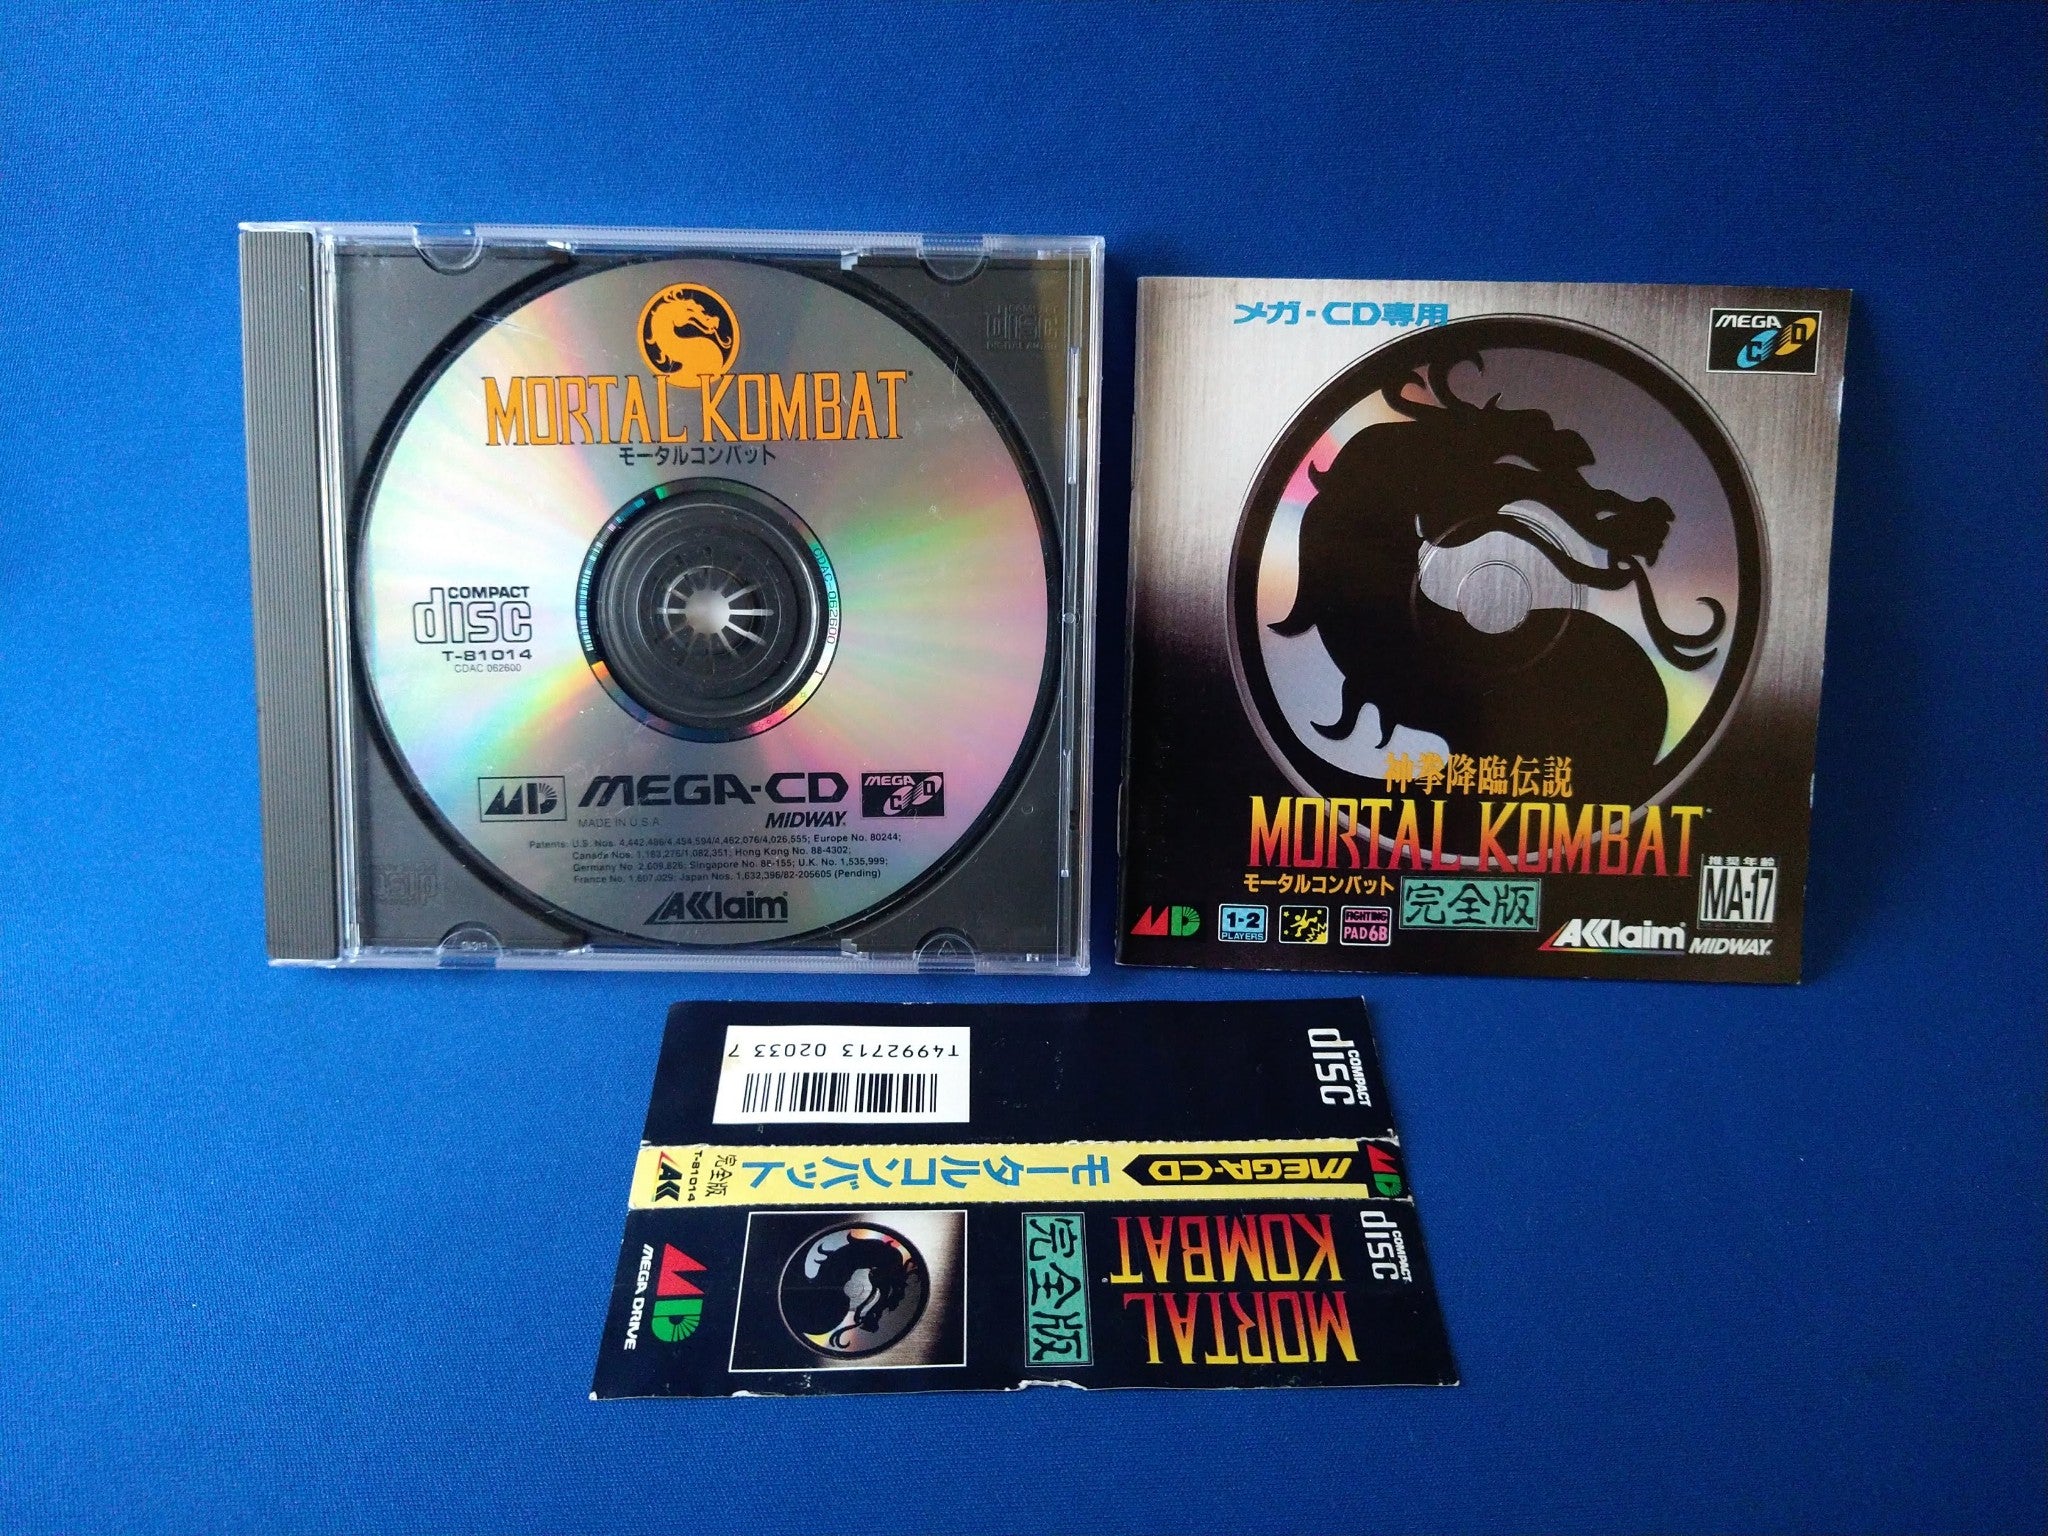 MORTAL KOMBAT MEGA CD shooter game Disk, Manual, Box set 